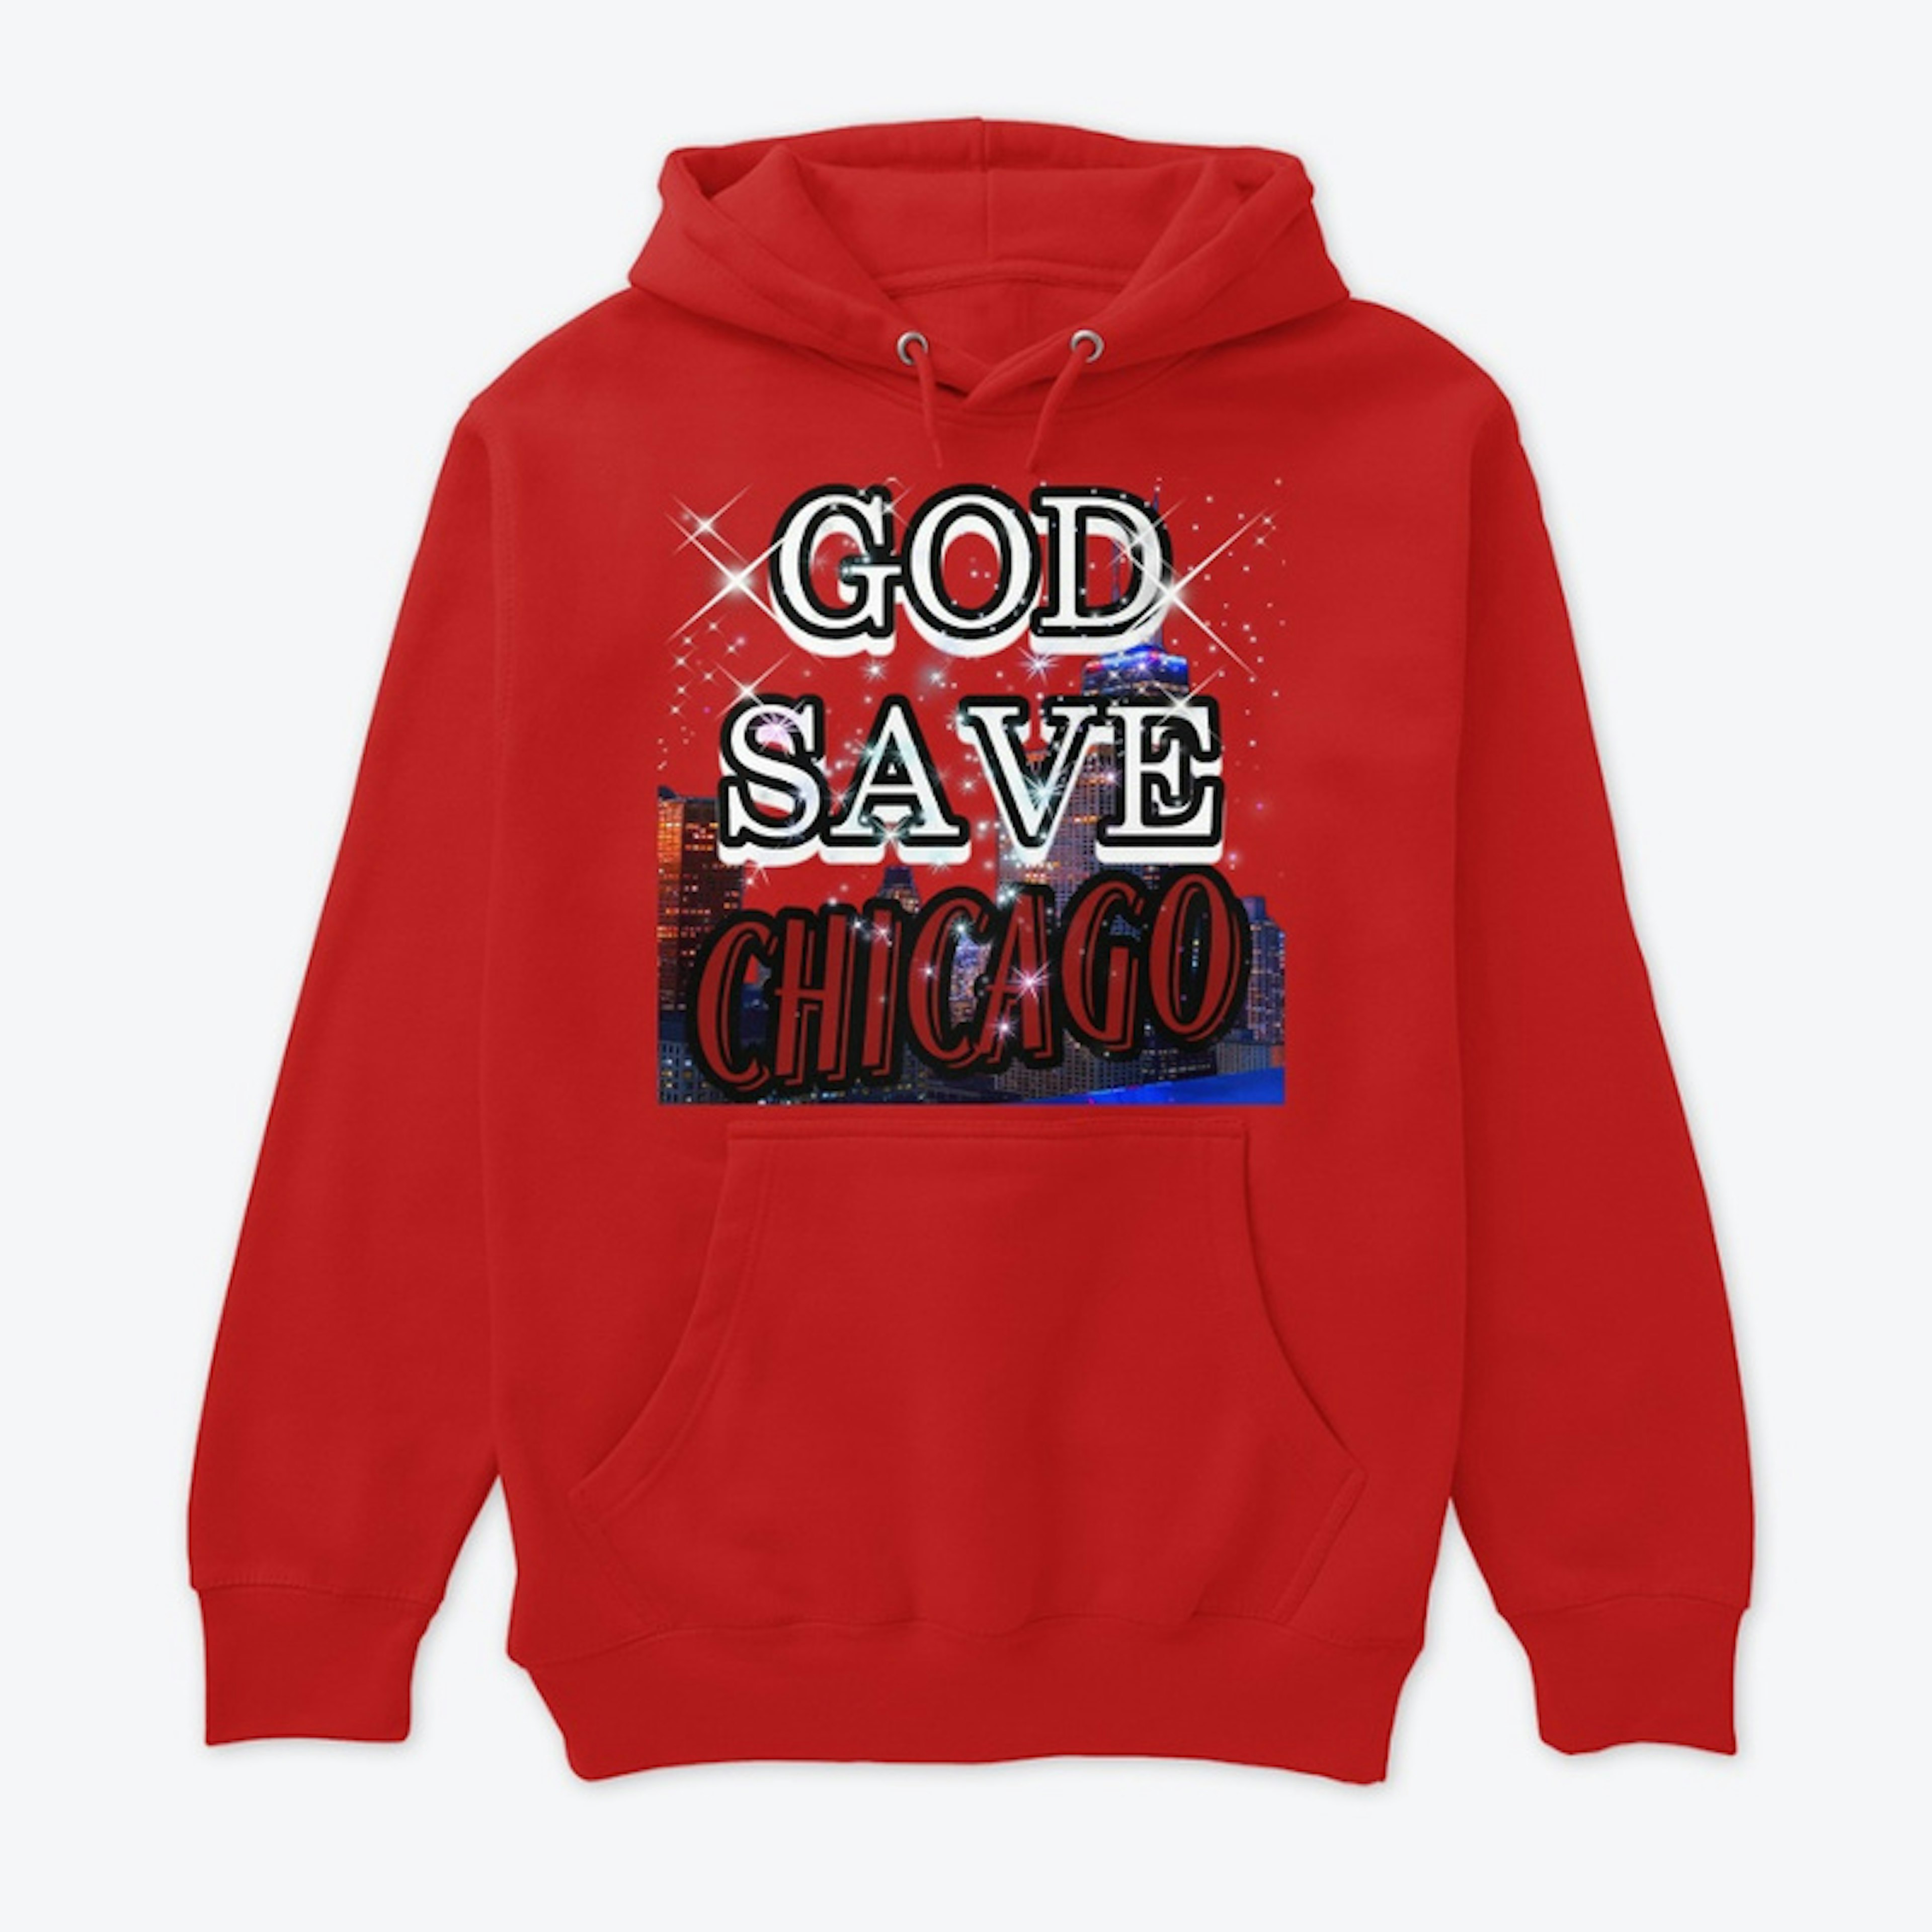 GOD SAVE CHICAGO!